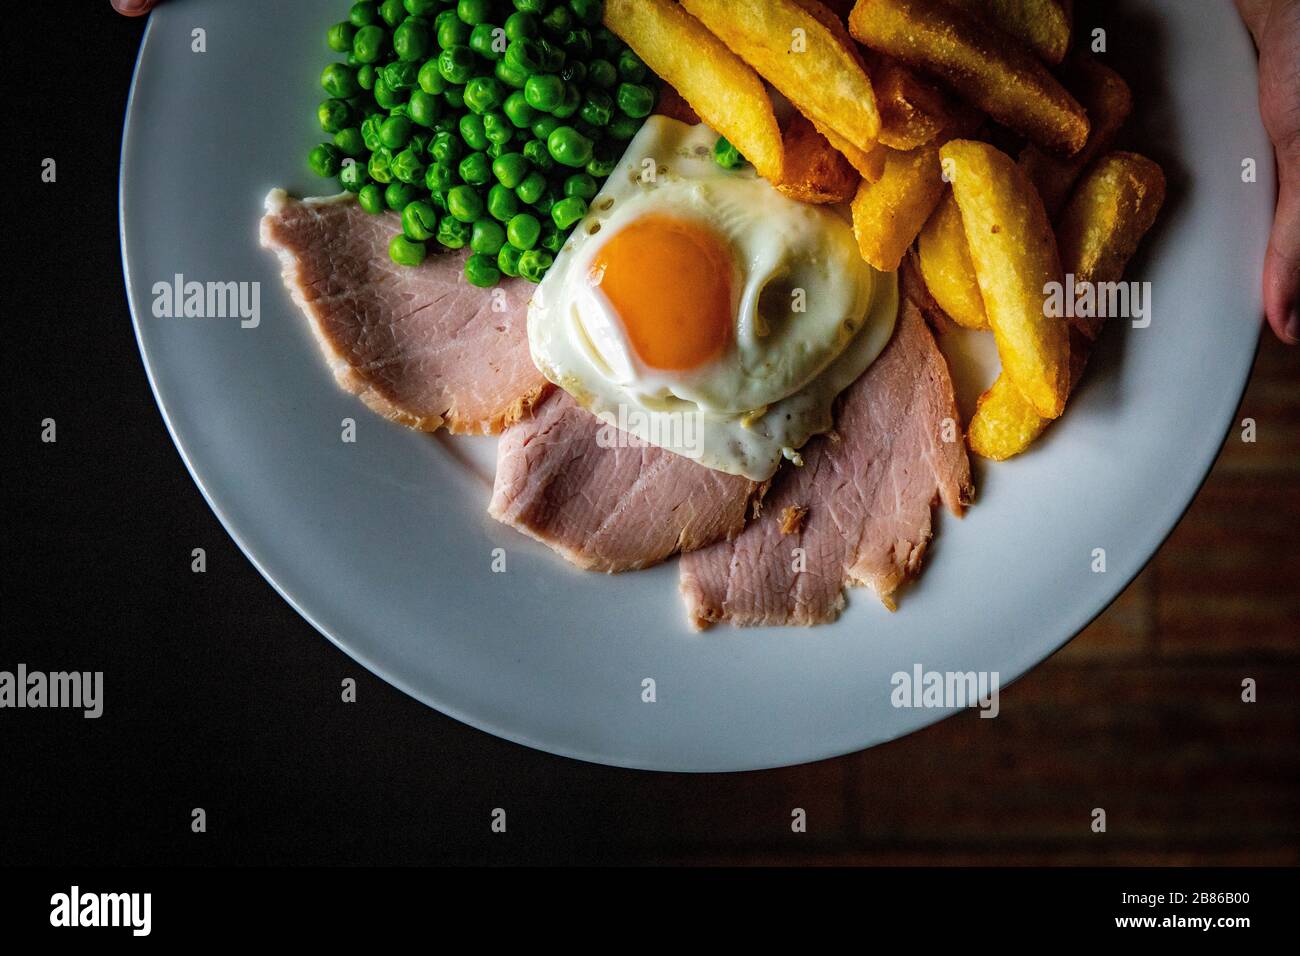 Ham egg & chips, a British classic. Stock Photo